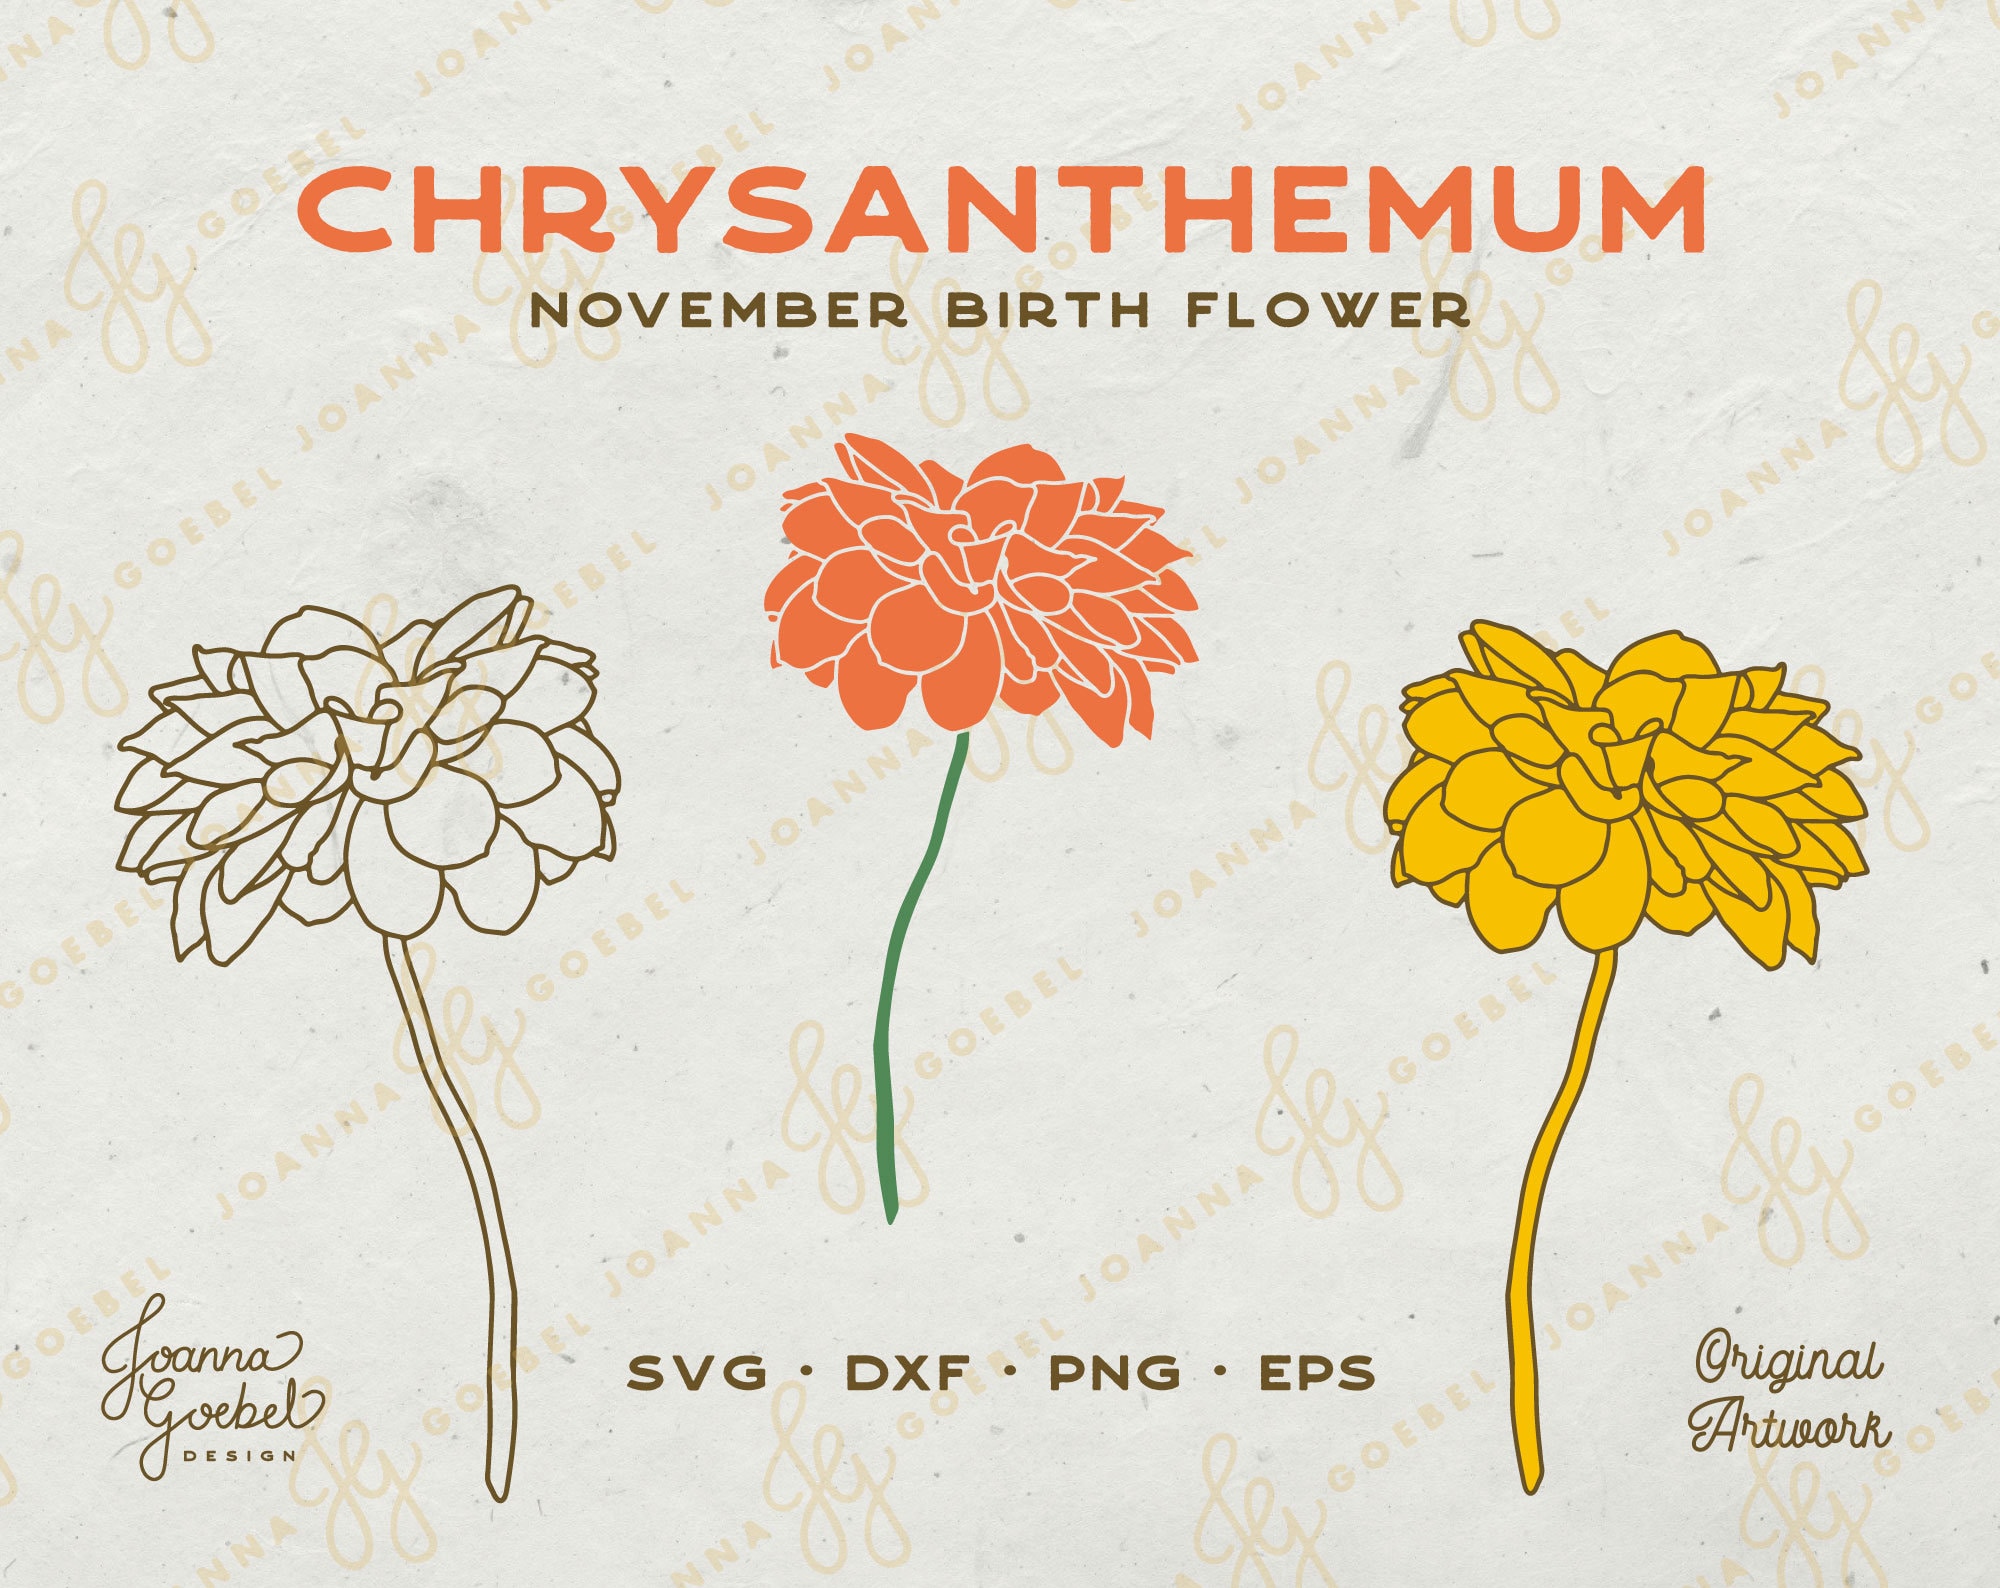 15 Chrysanthemum November Birth Month Flower Tattoo Ideas   EntertainmentMesh